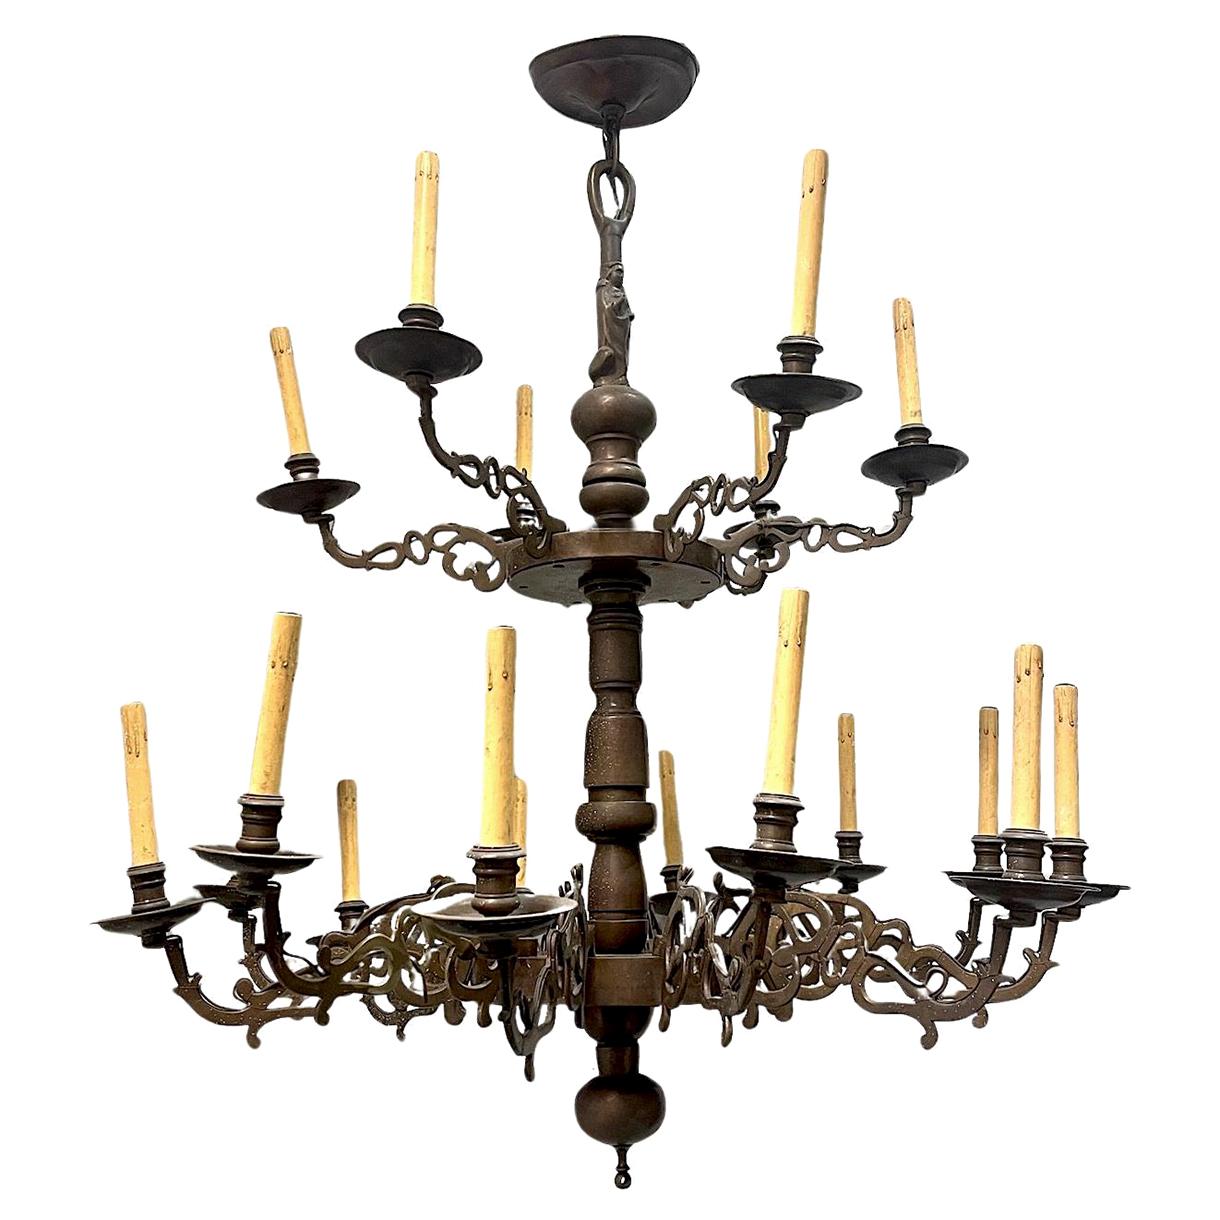 A circa 1900 Dutch 18 lights patinated bronze double tiered chandelier

Measurements:
Min. drop: 45